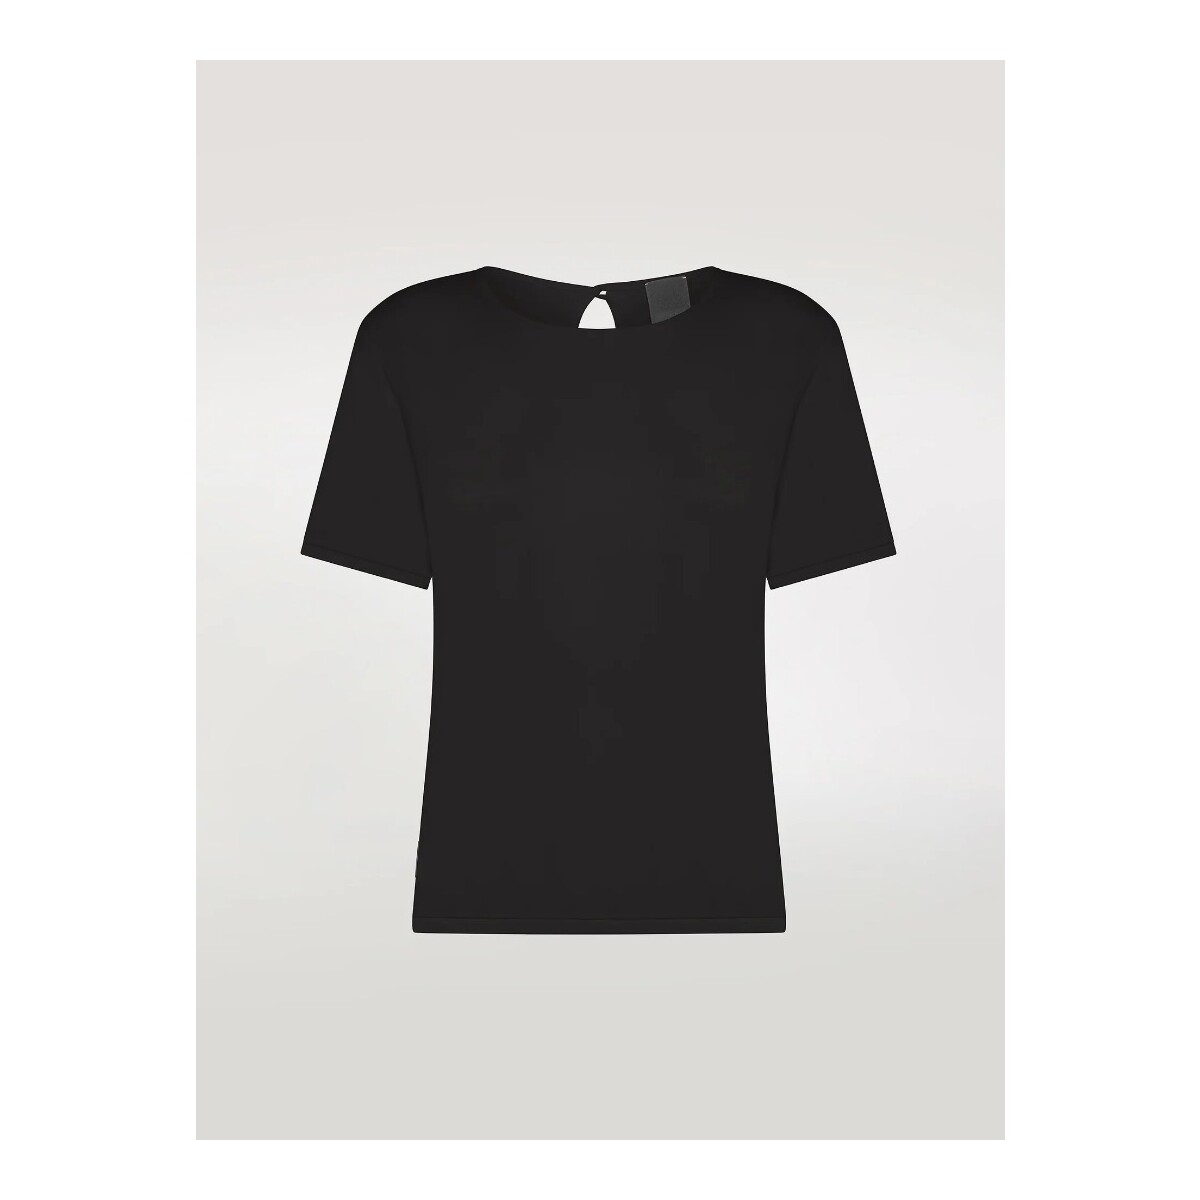 Kleidung Damen T-Shirts & Poloshirts Rrd - Roberto Ricci Designs S24708 Schwarz